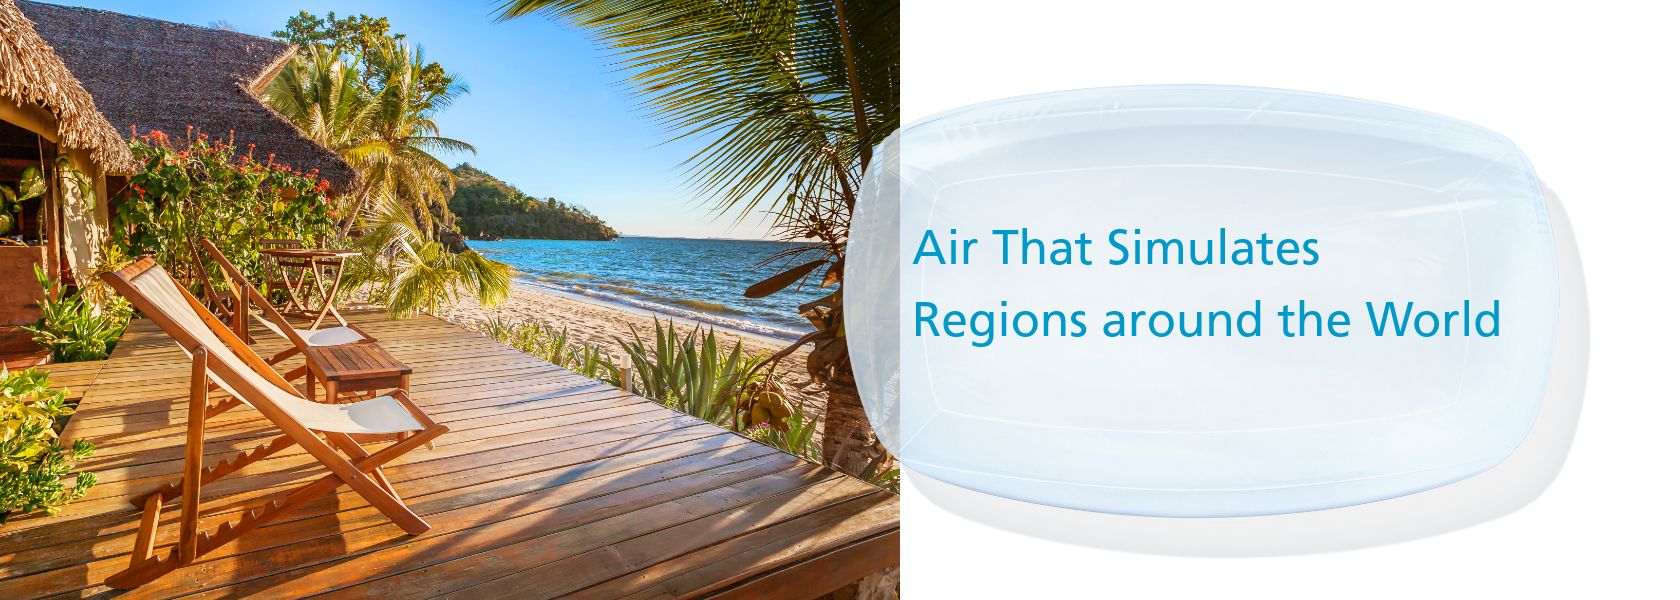 Air That Simulates Regions around the World